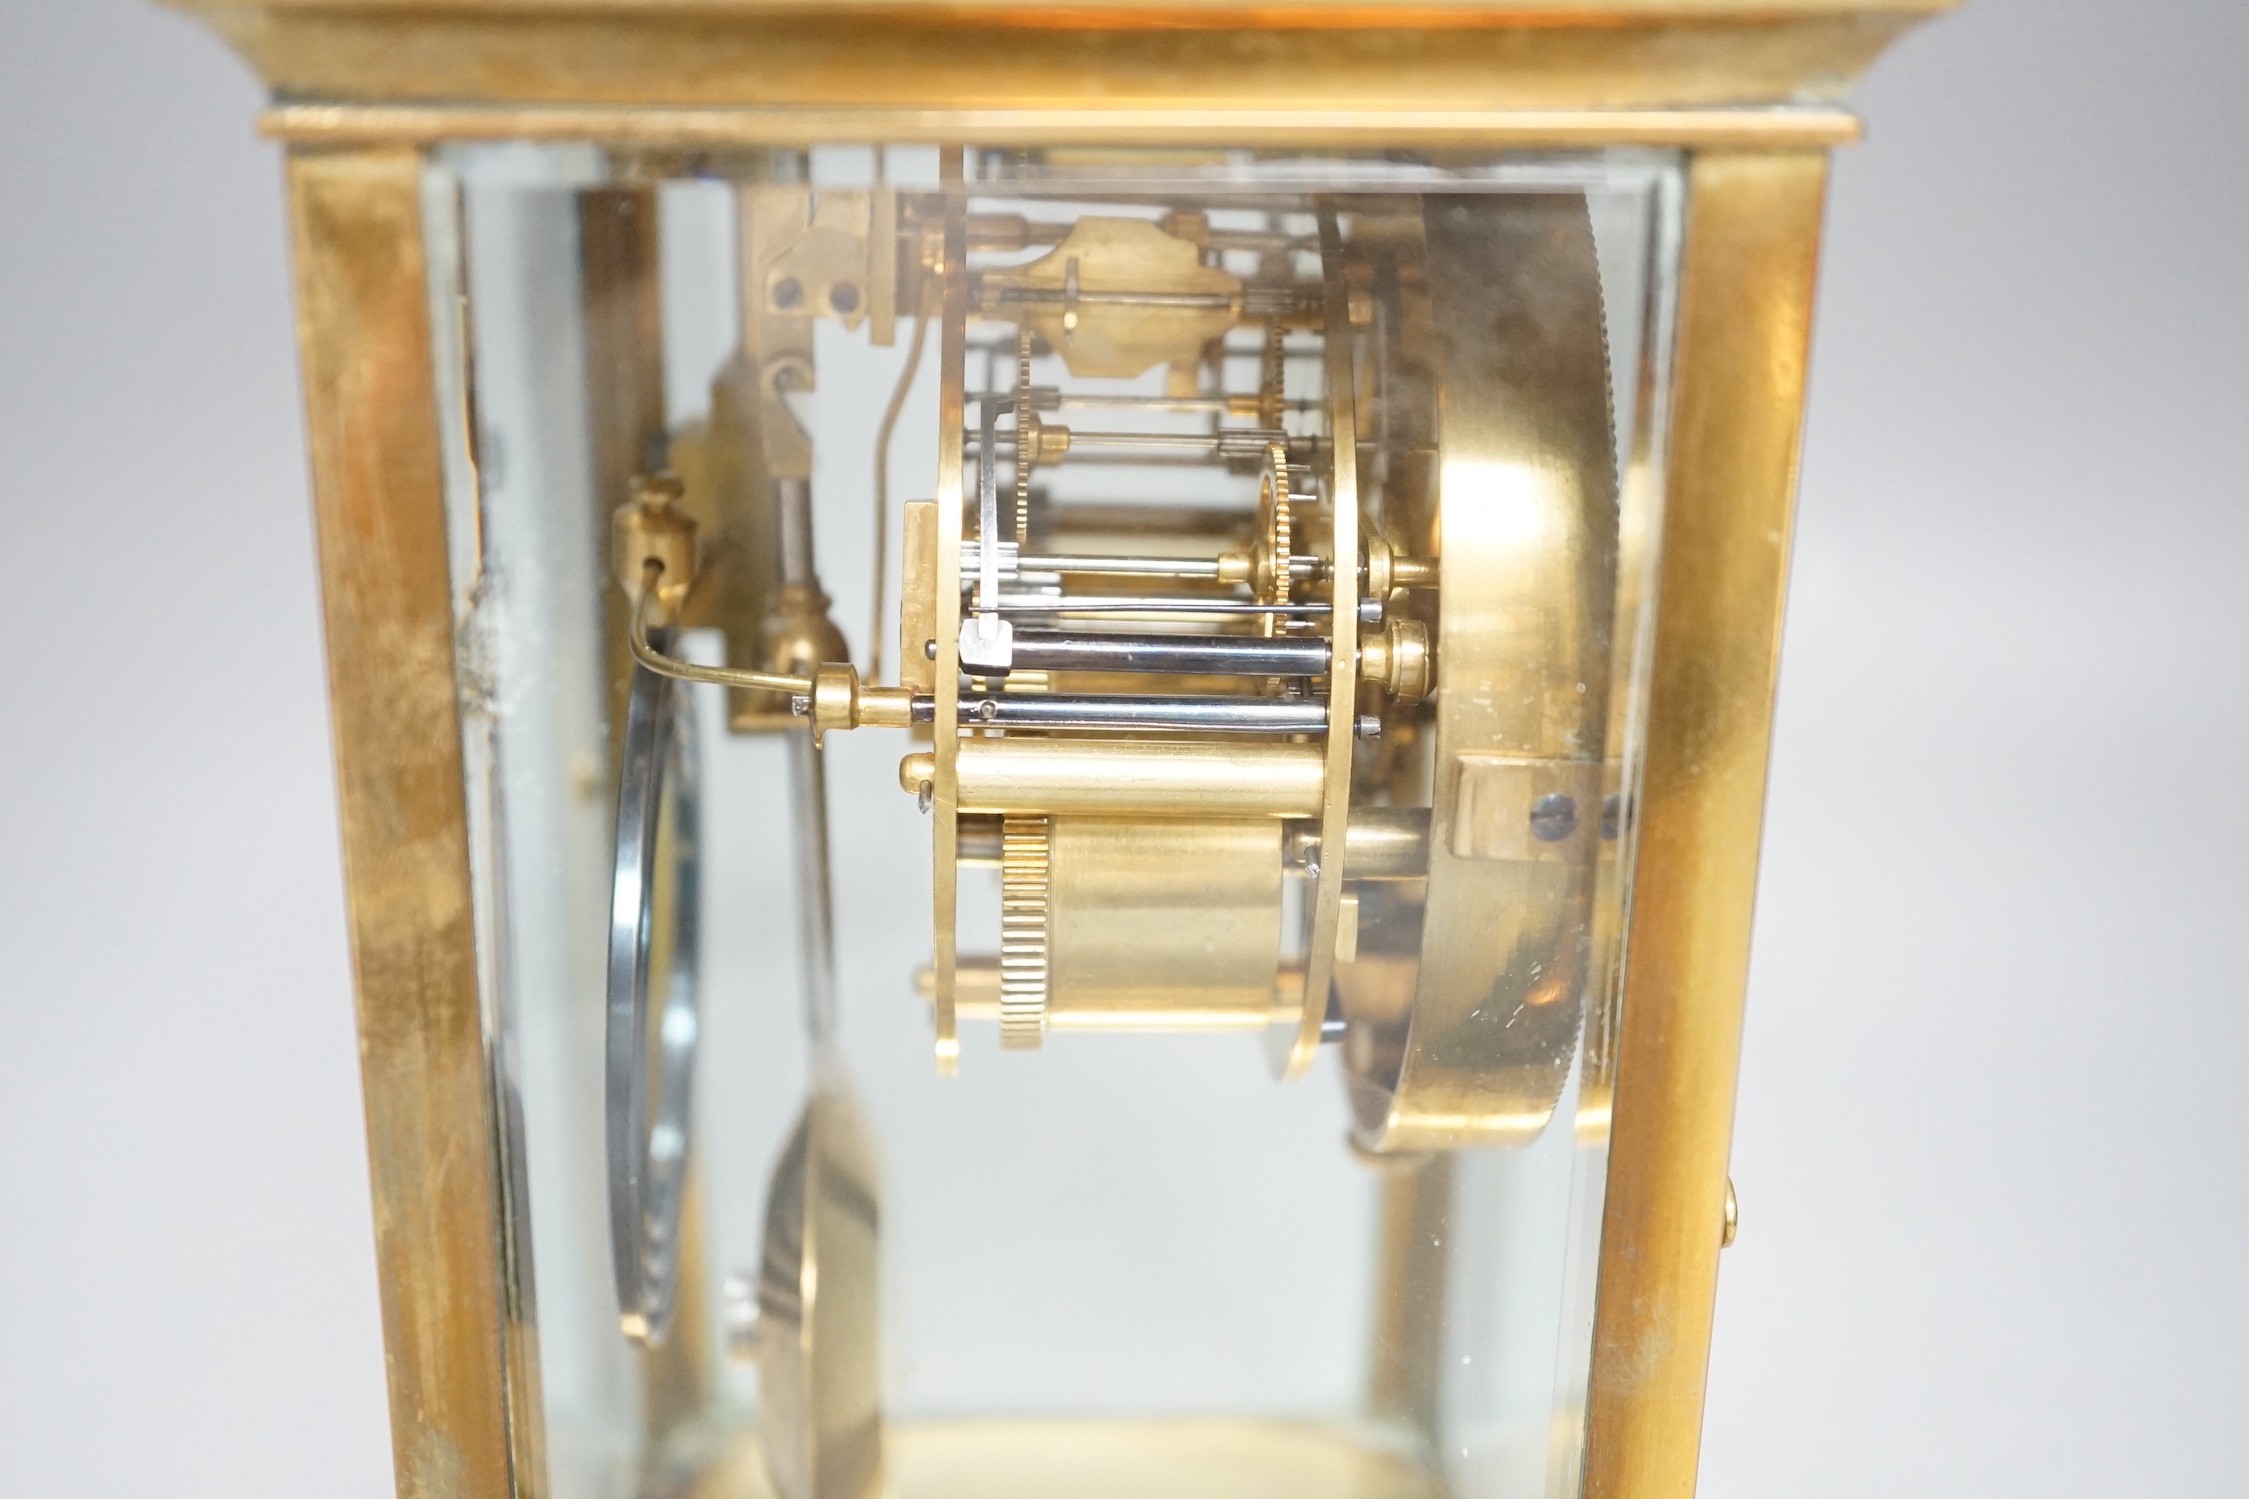 A French brass four glass mantel clock, 23cms high